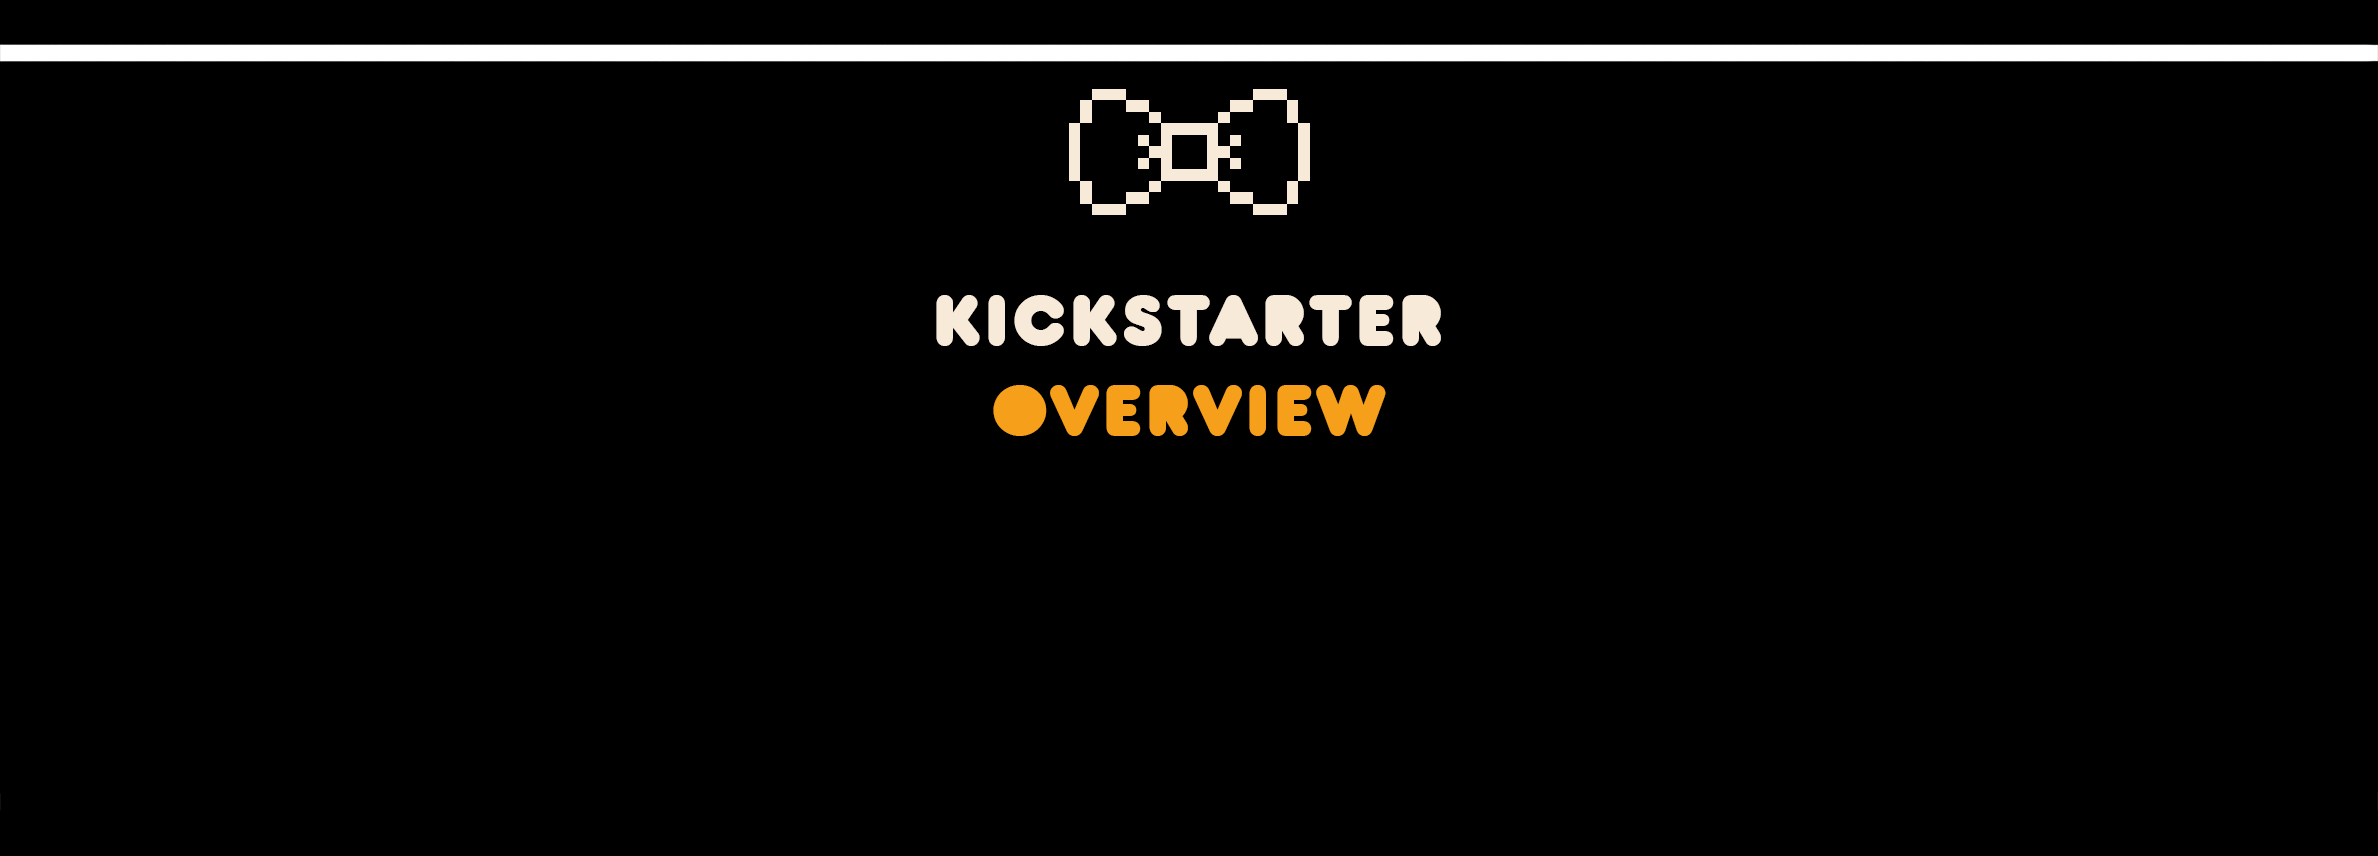 Building a Prelaunch Community For Kickstarter